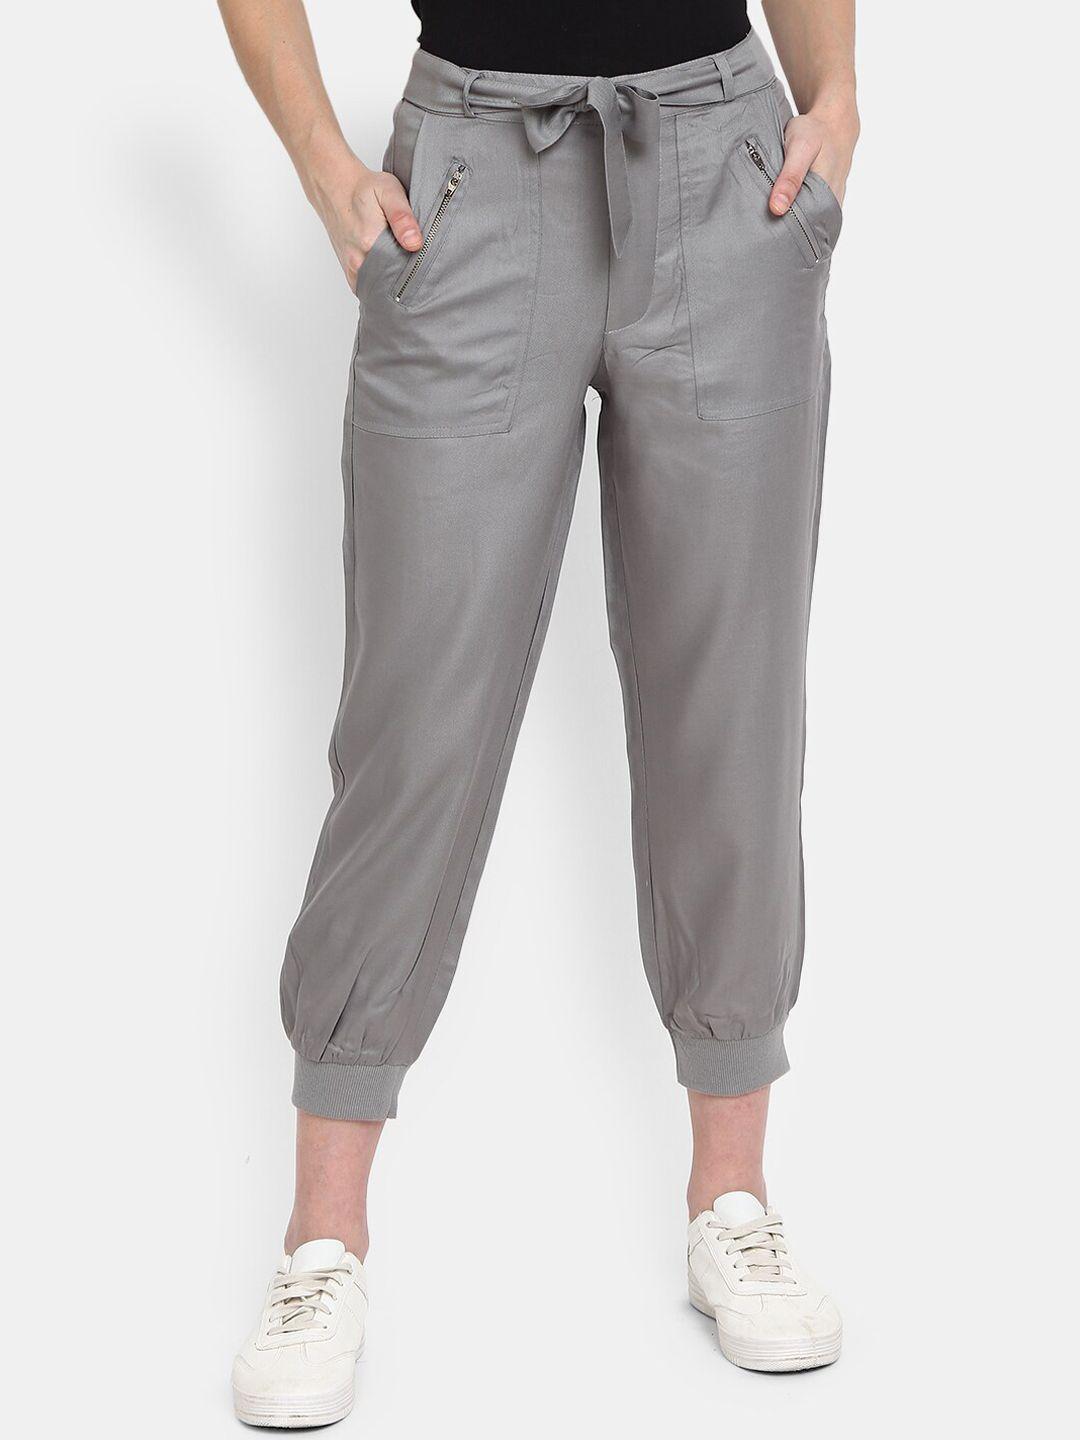 v-mart women grey classic joggers trousers